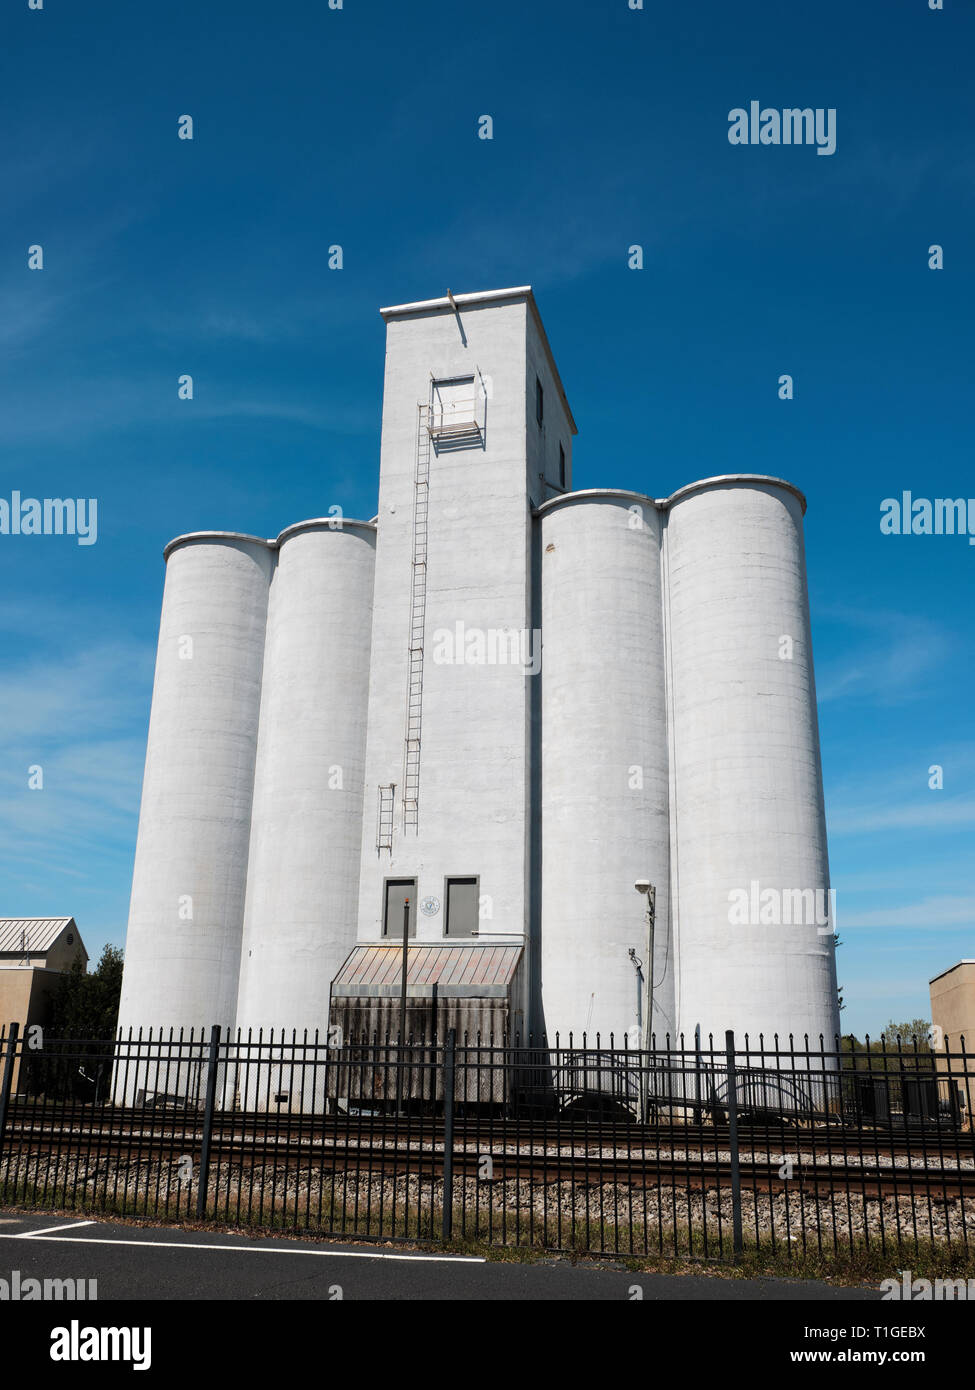 Tall or large grain silos along the railroad or train tracks in Montgomery Alabama, USA. Stock Photo